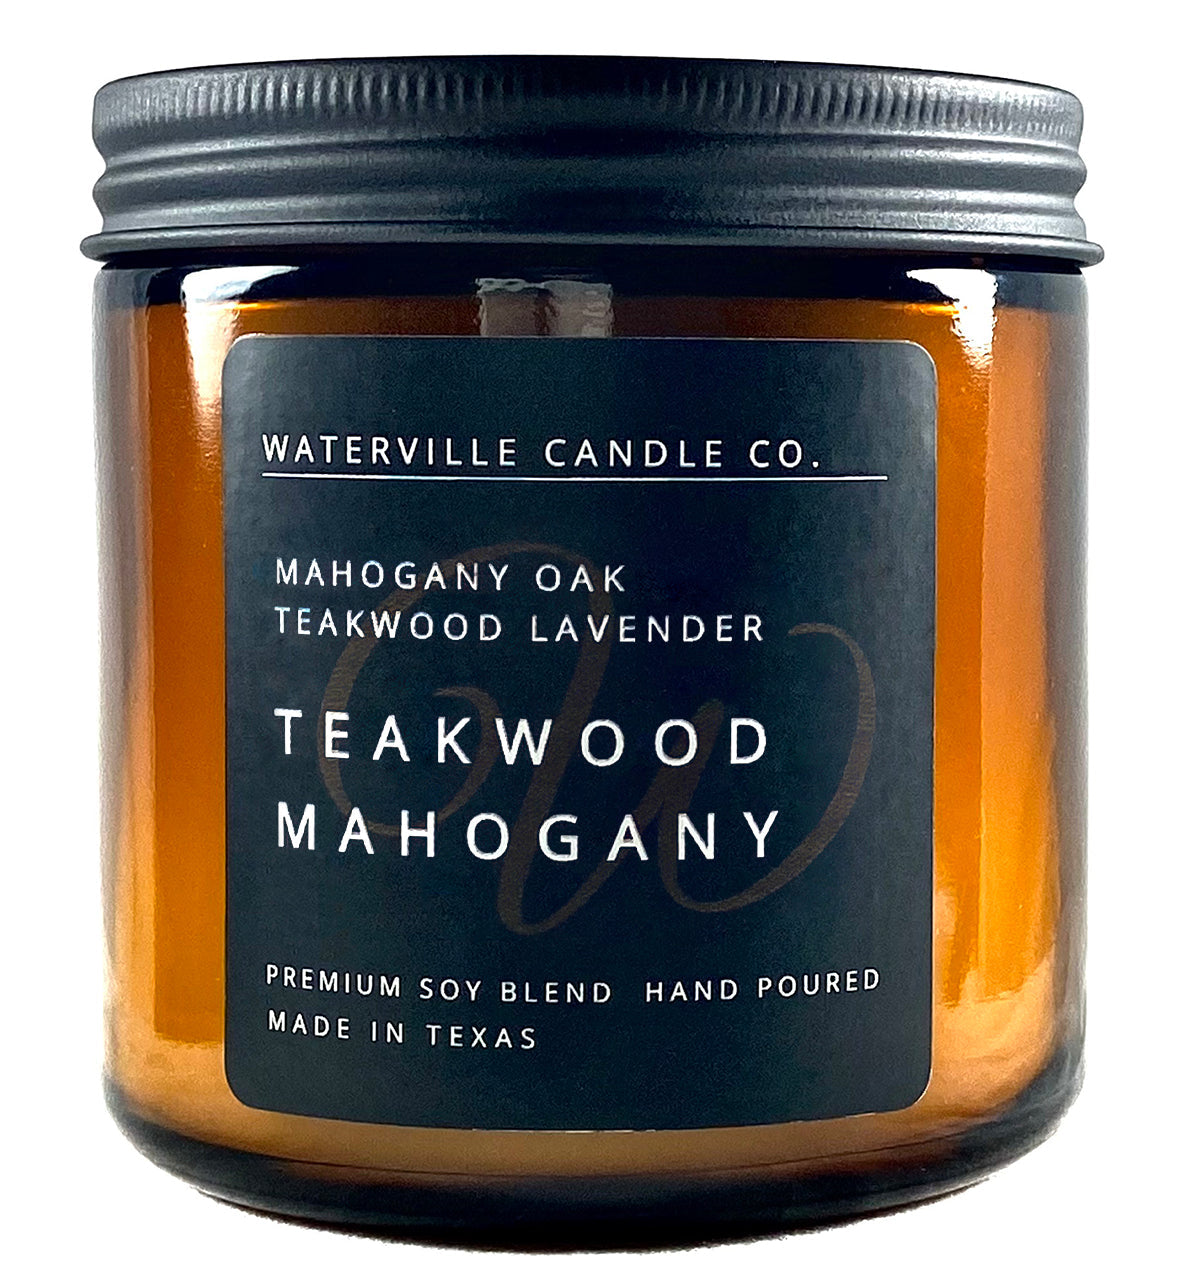 MARLEY - Amber Classics Candle {teakwood + clove}